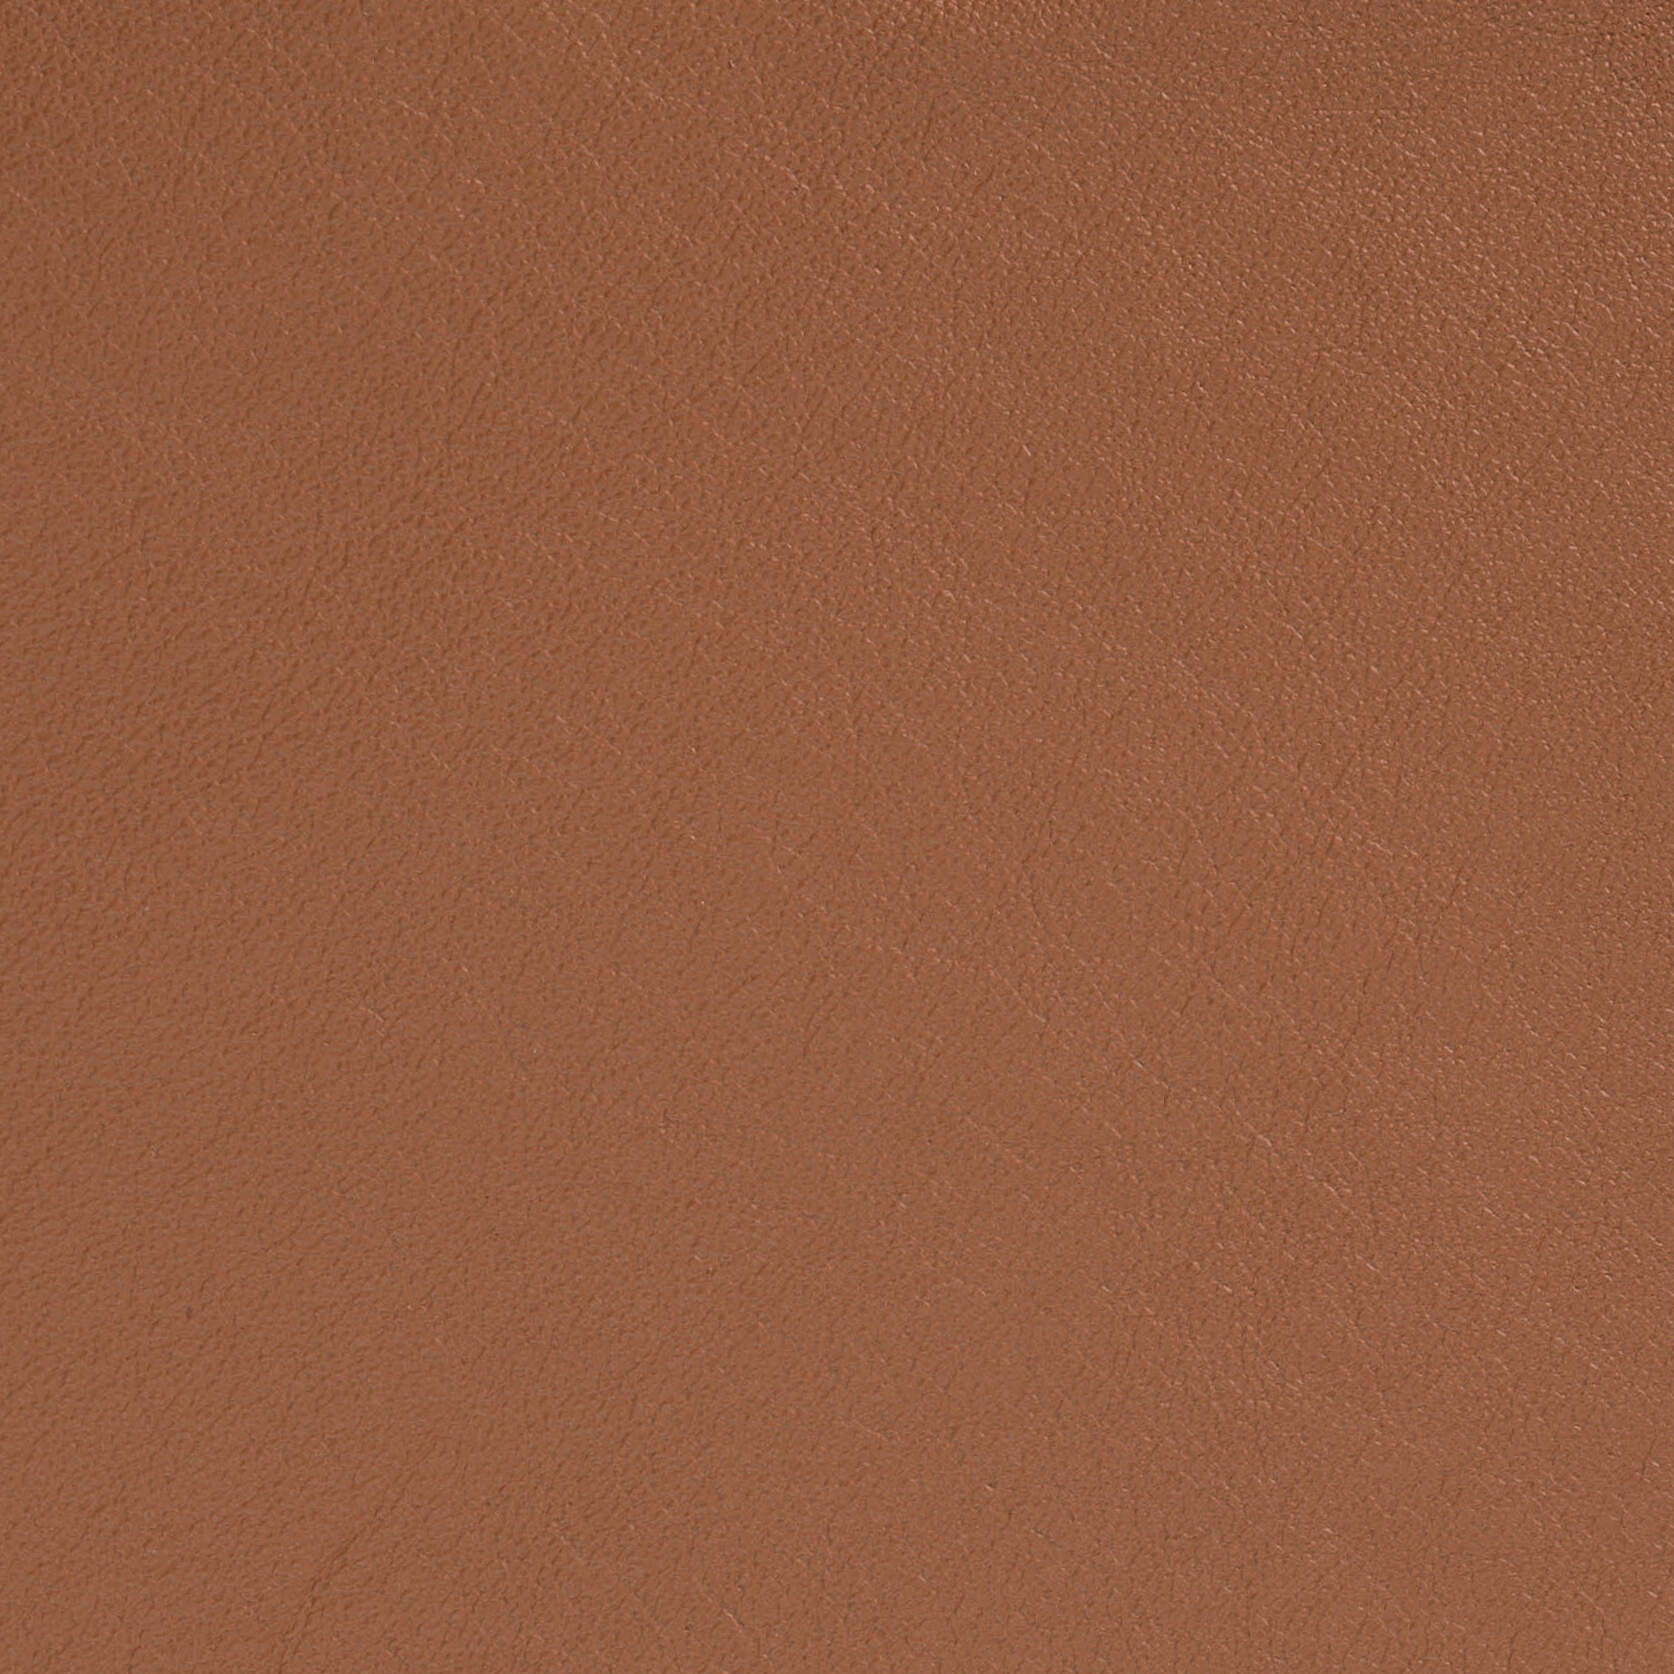 Elmosoft Leather Tan